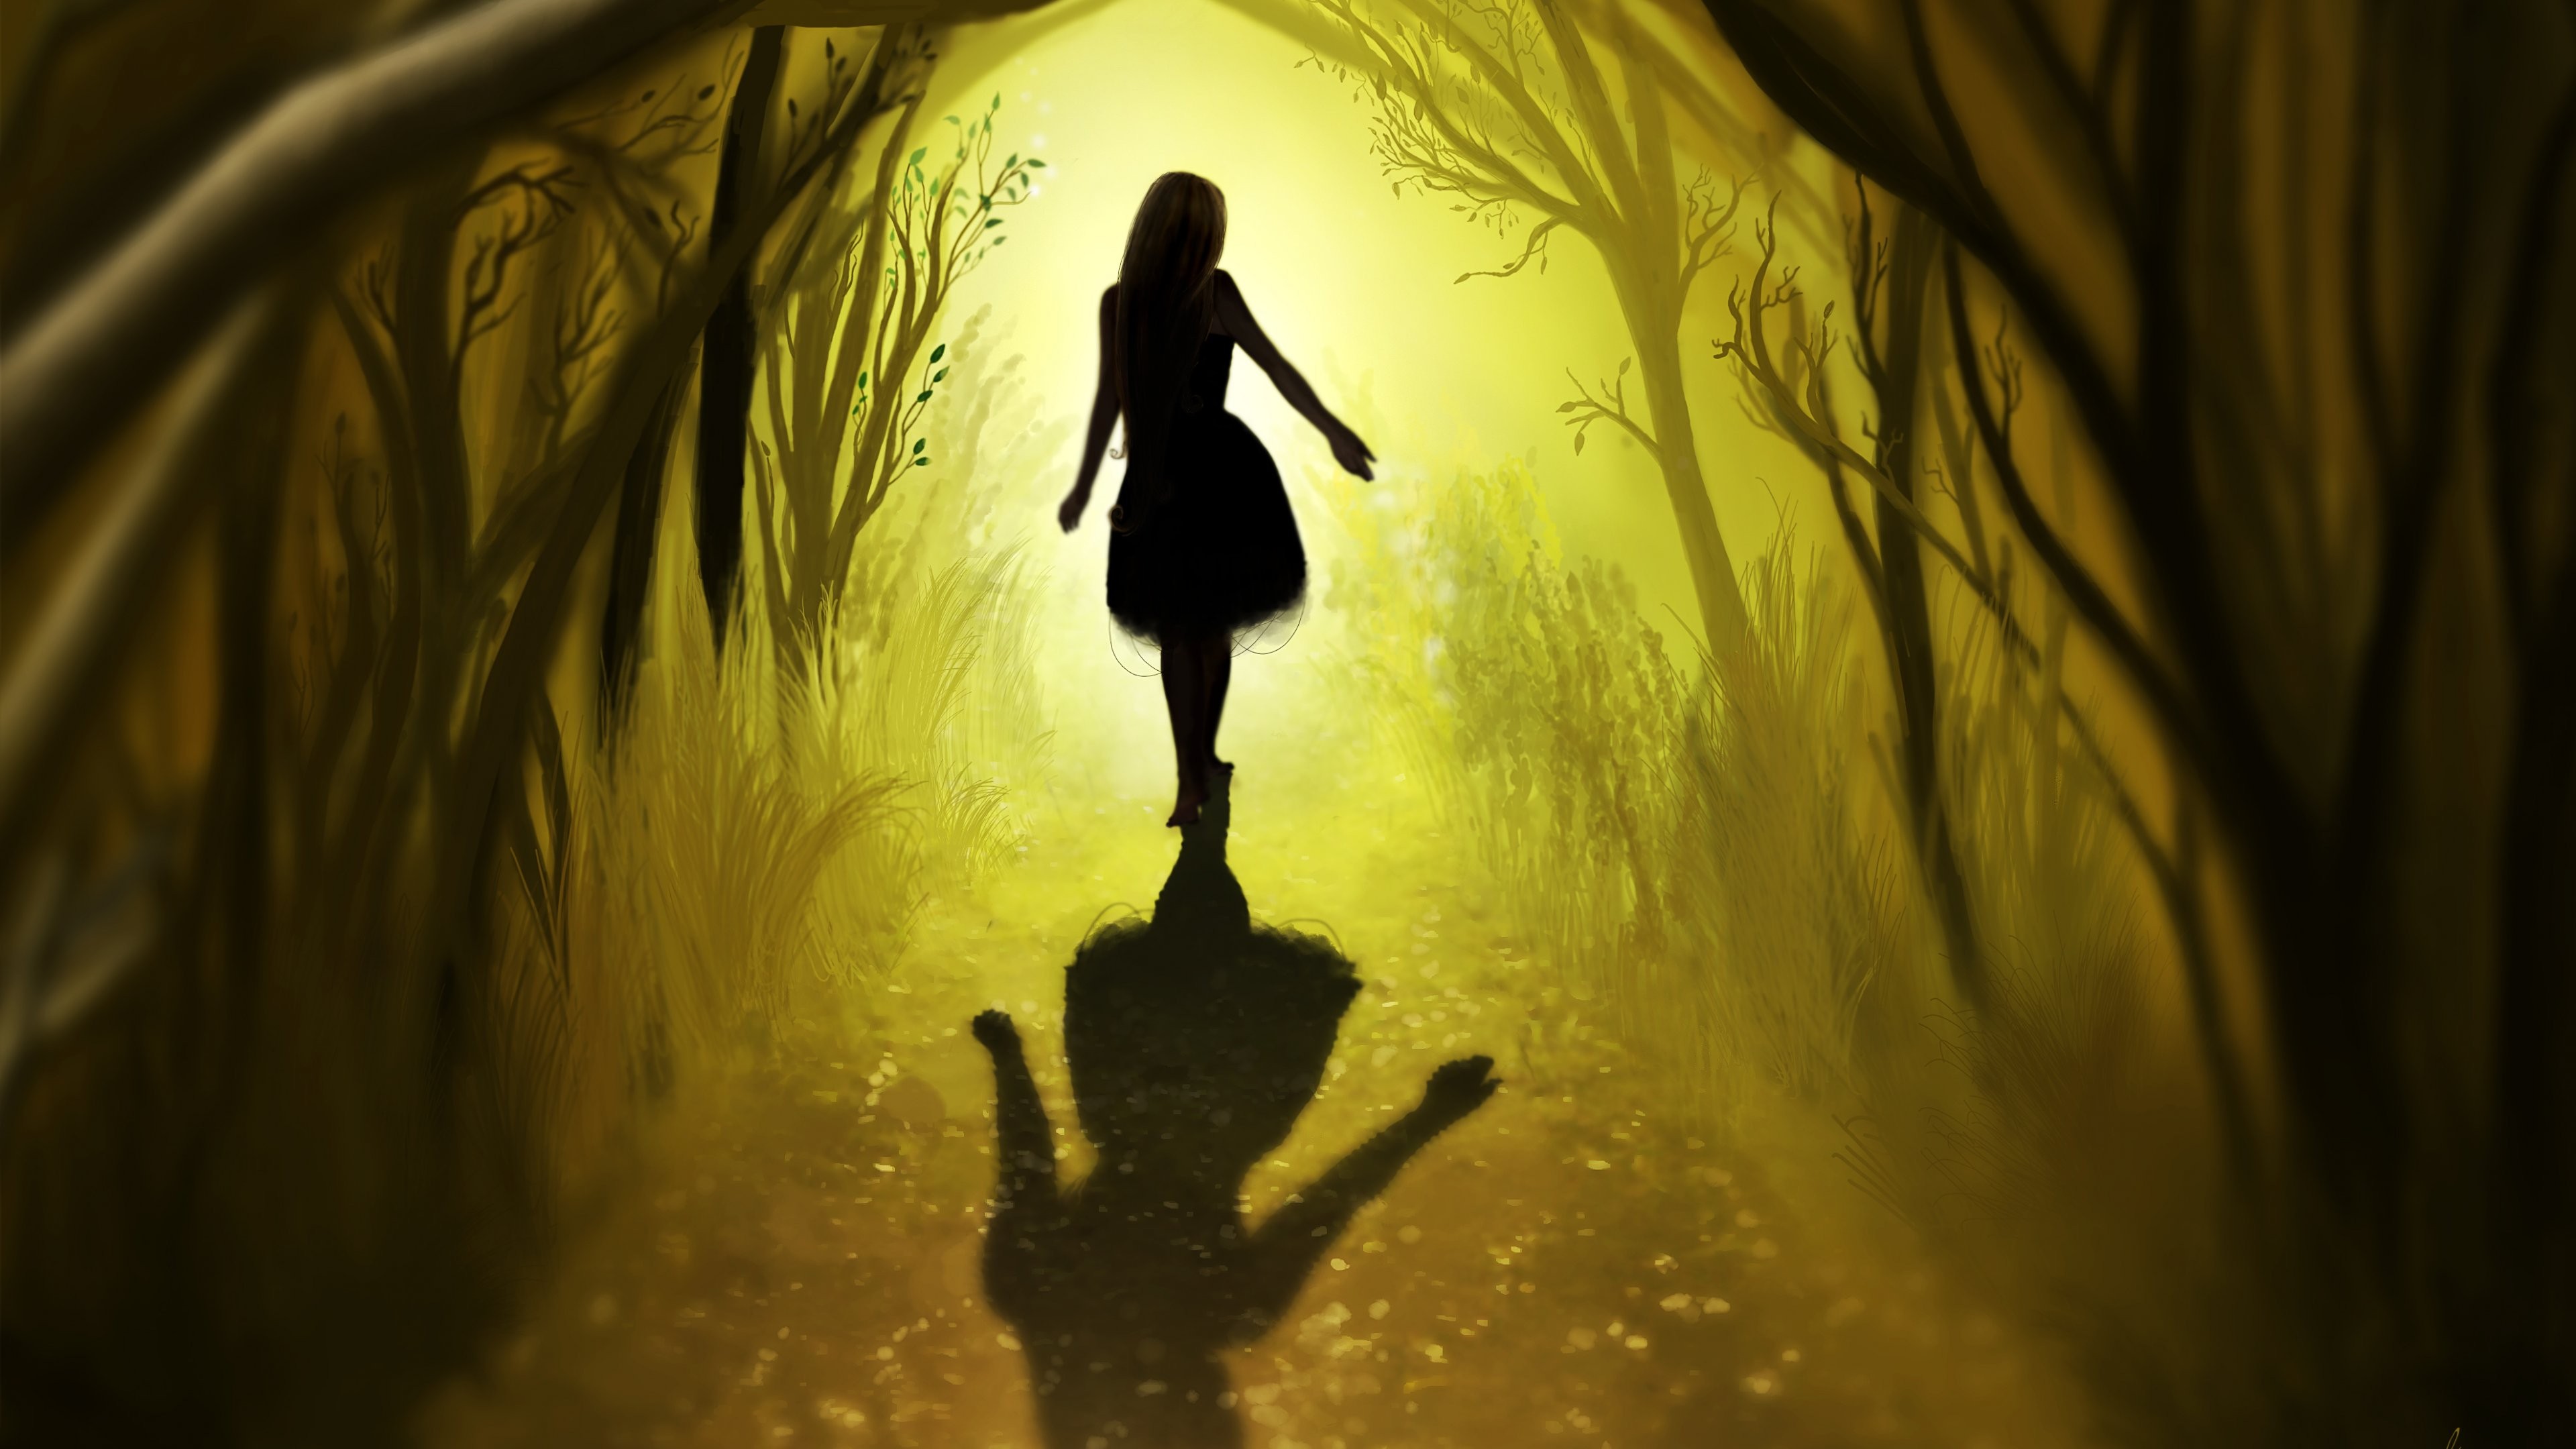 General 3840x2160 fantasy art fantasy girl silhouette artwork women shadow dark trees standing forest women outdoors digital art